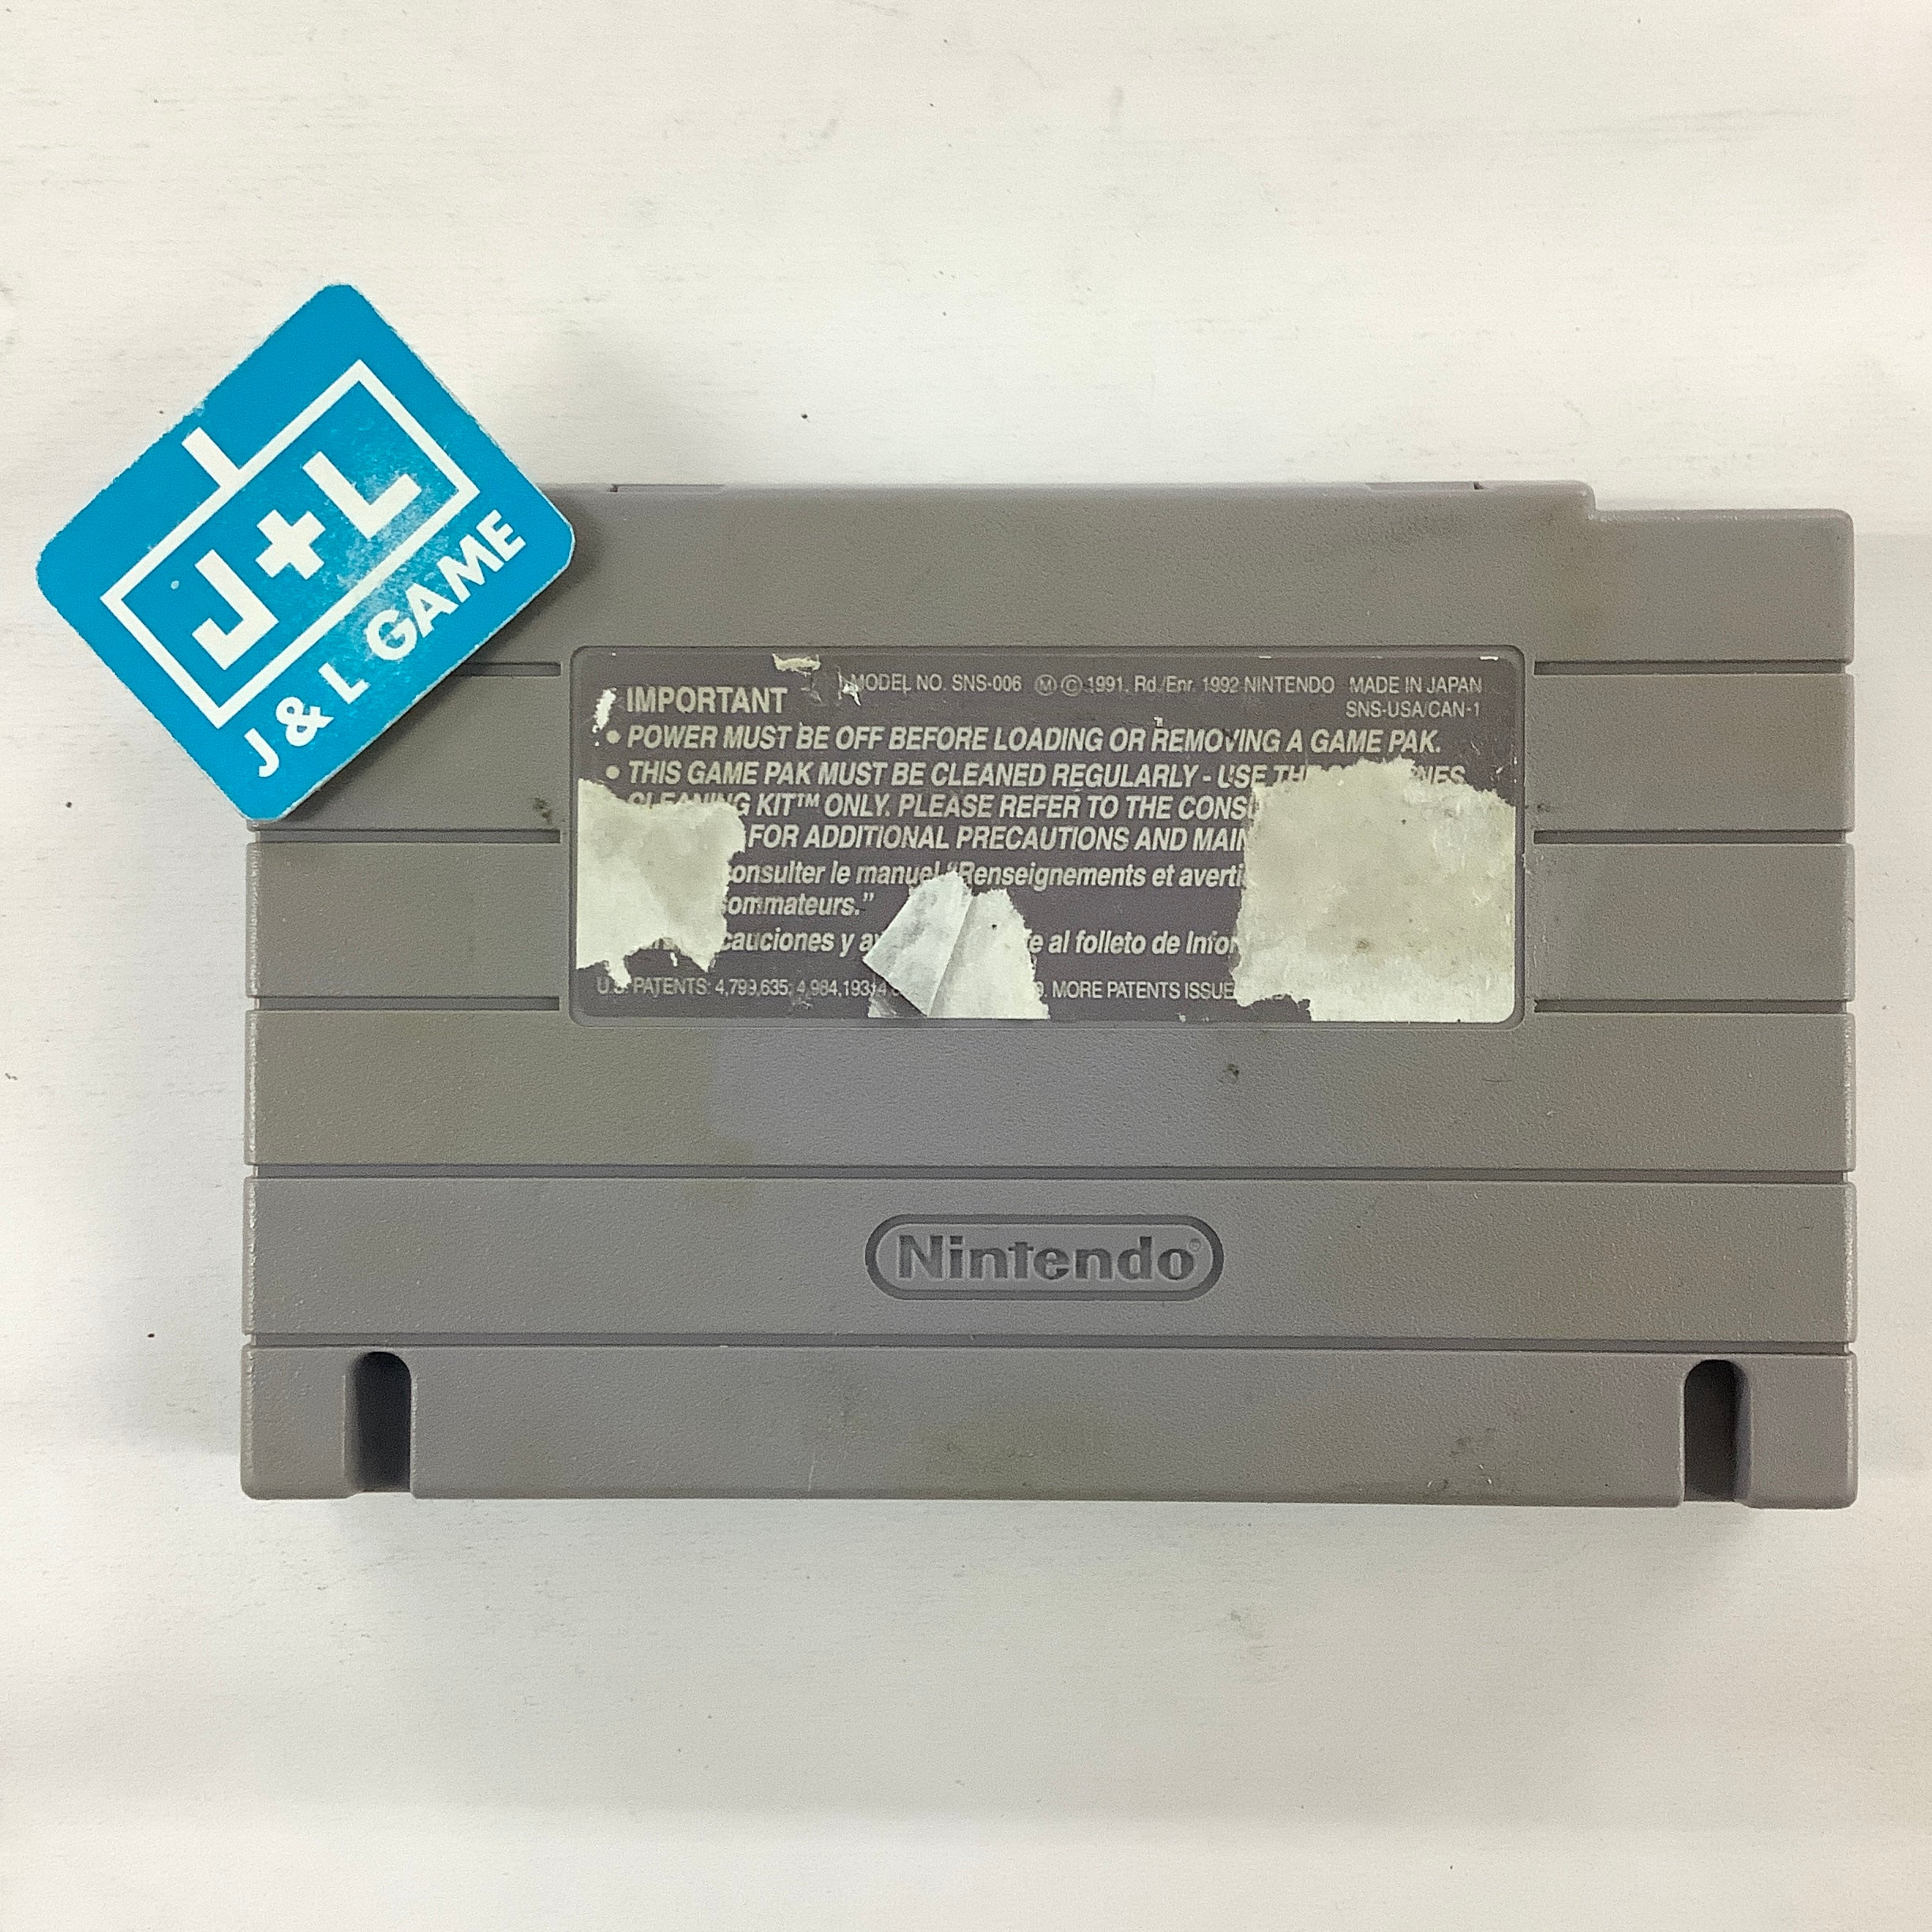 GP-1 - (SNES) Super Nintendo [Pre-Owned] Video Games Atlus   